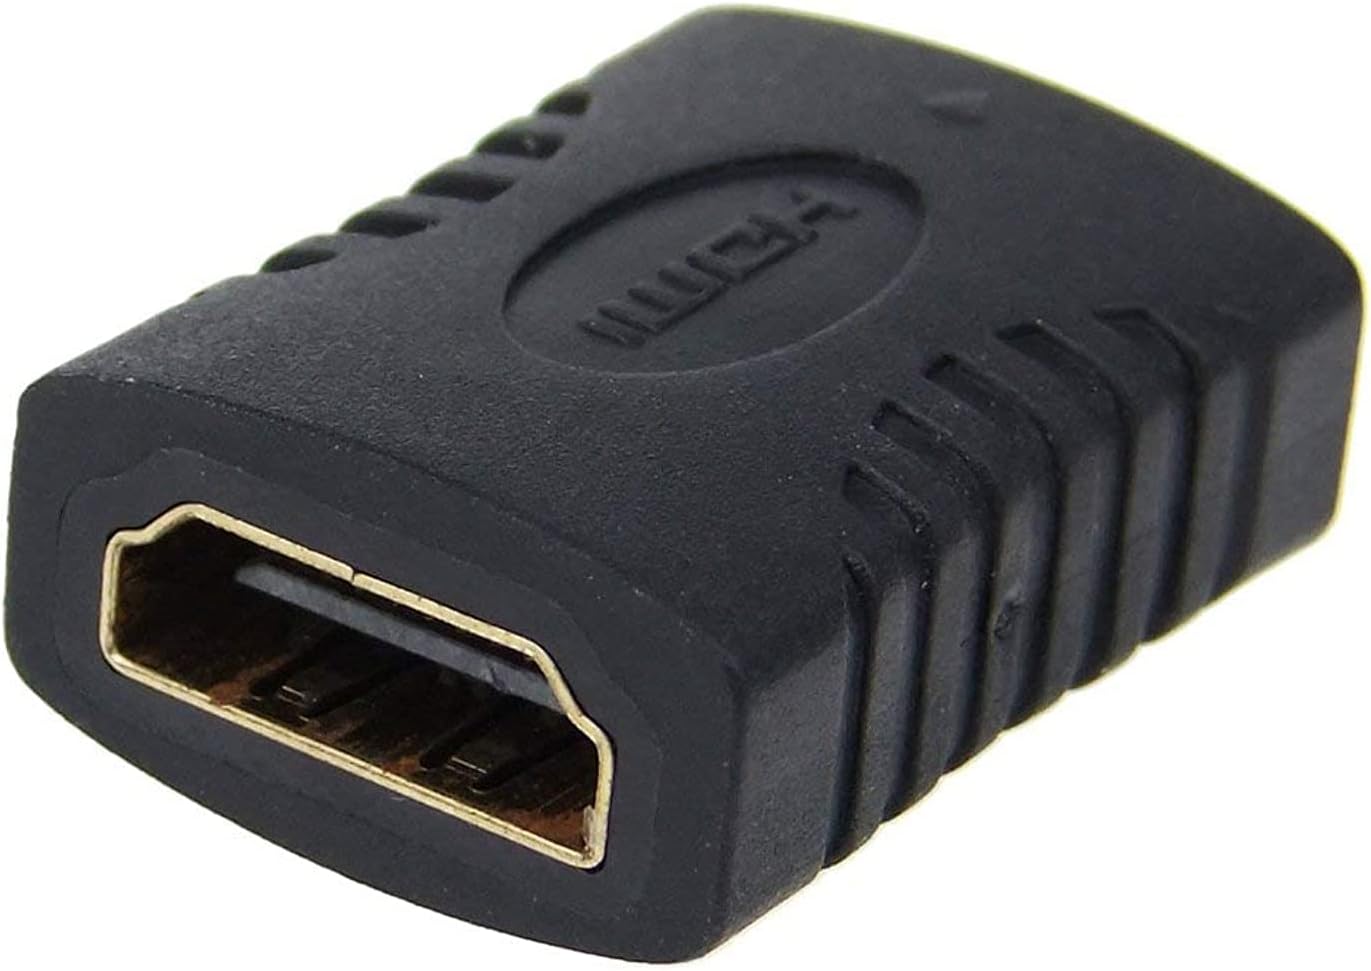 HDMI Female to Female Adapter - Black